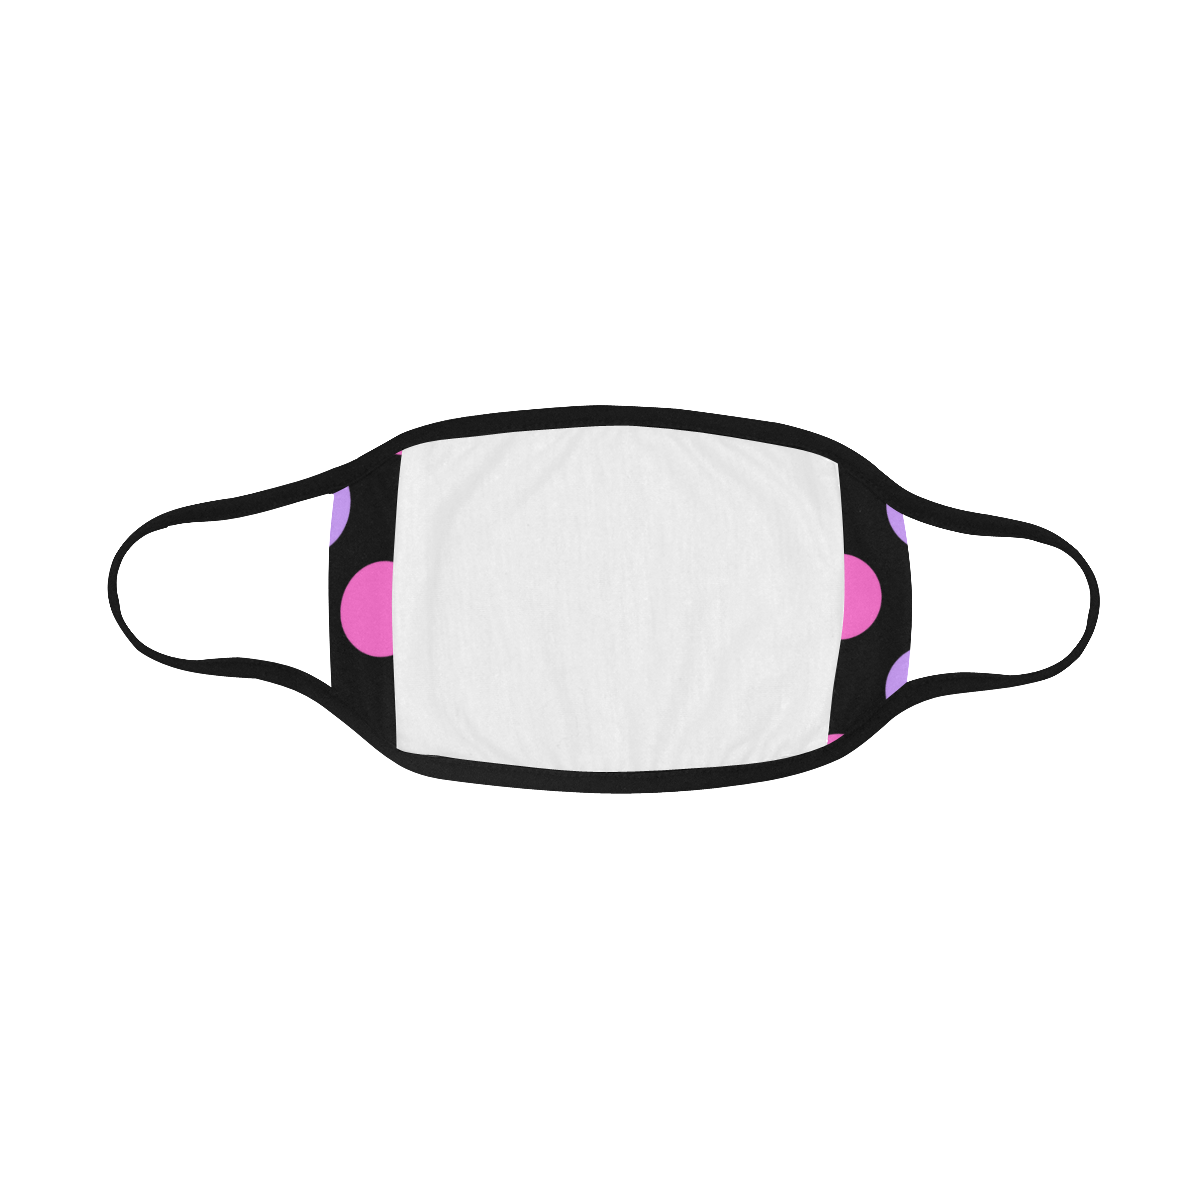 circle pattern lilac cc99ff and pink ff66cc Mouth Mask